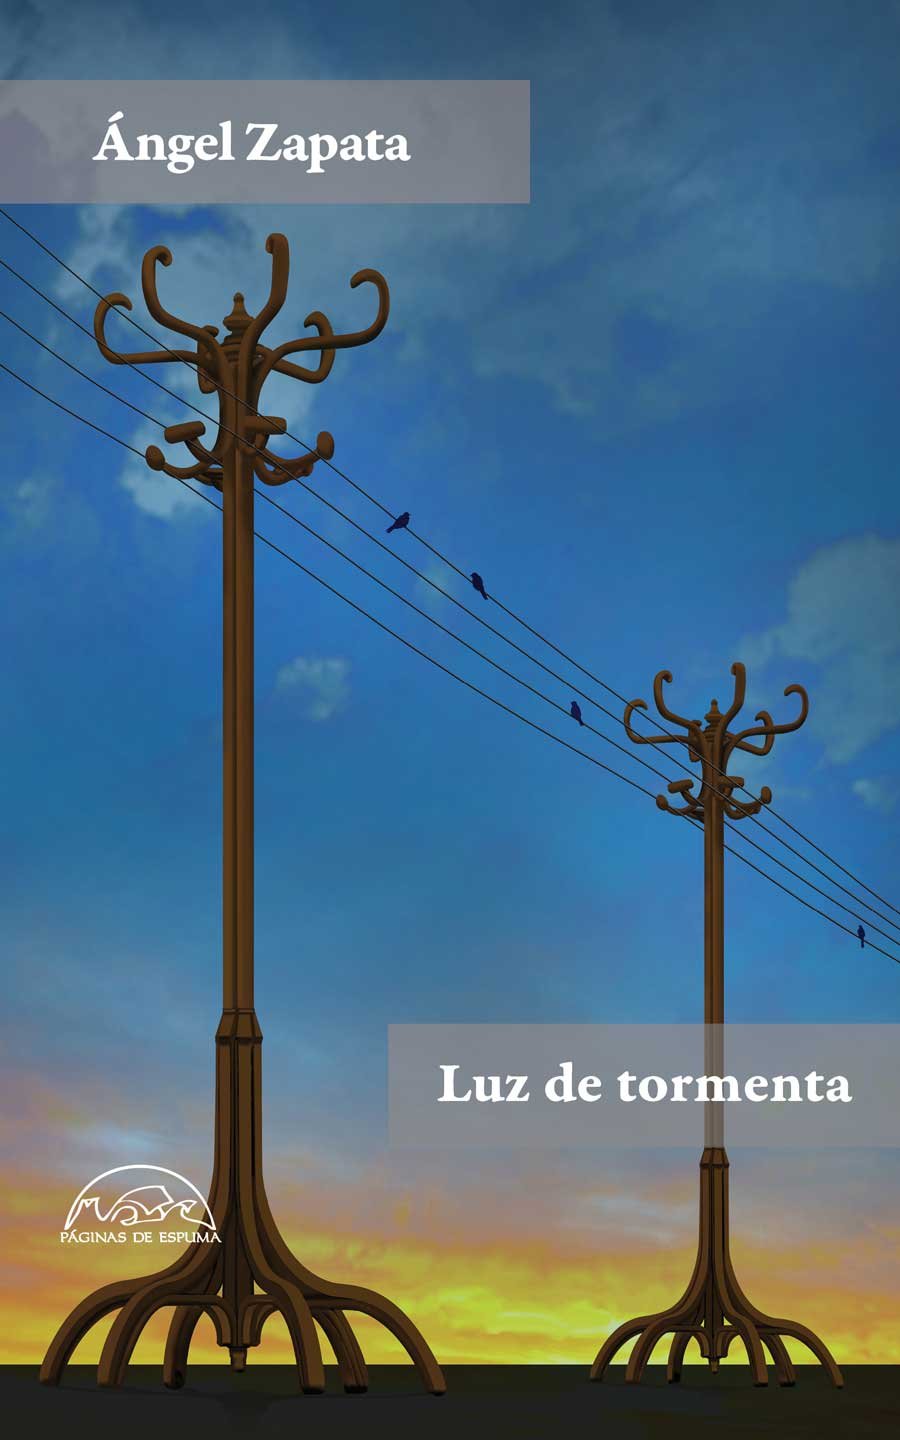 Portada de "Luz de tormenta", de Ángel Zapata